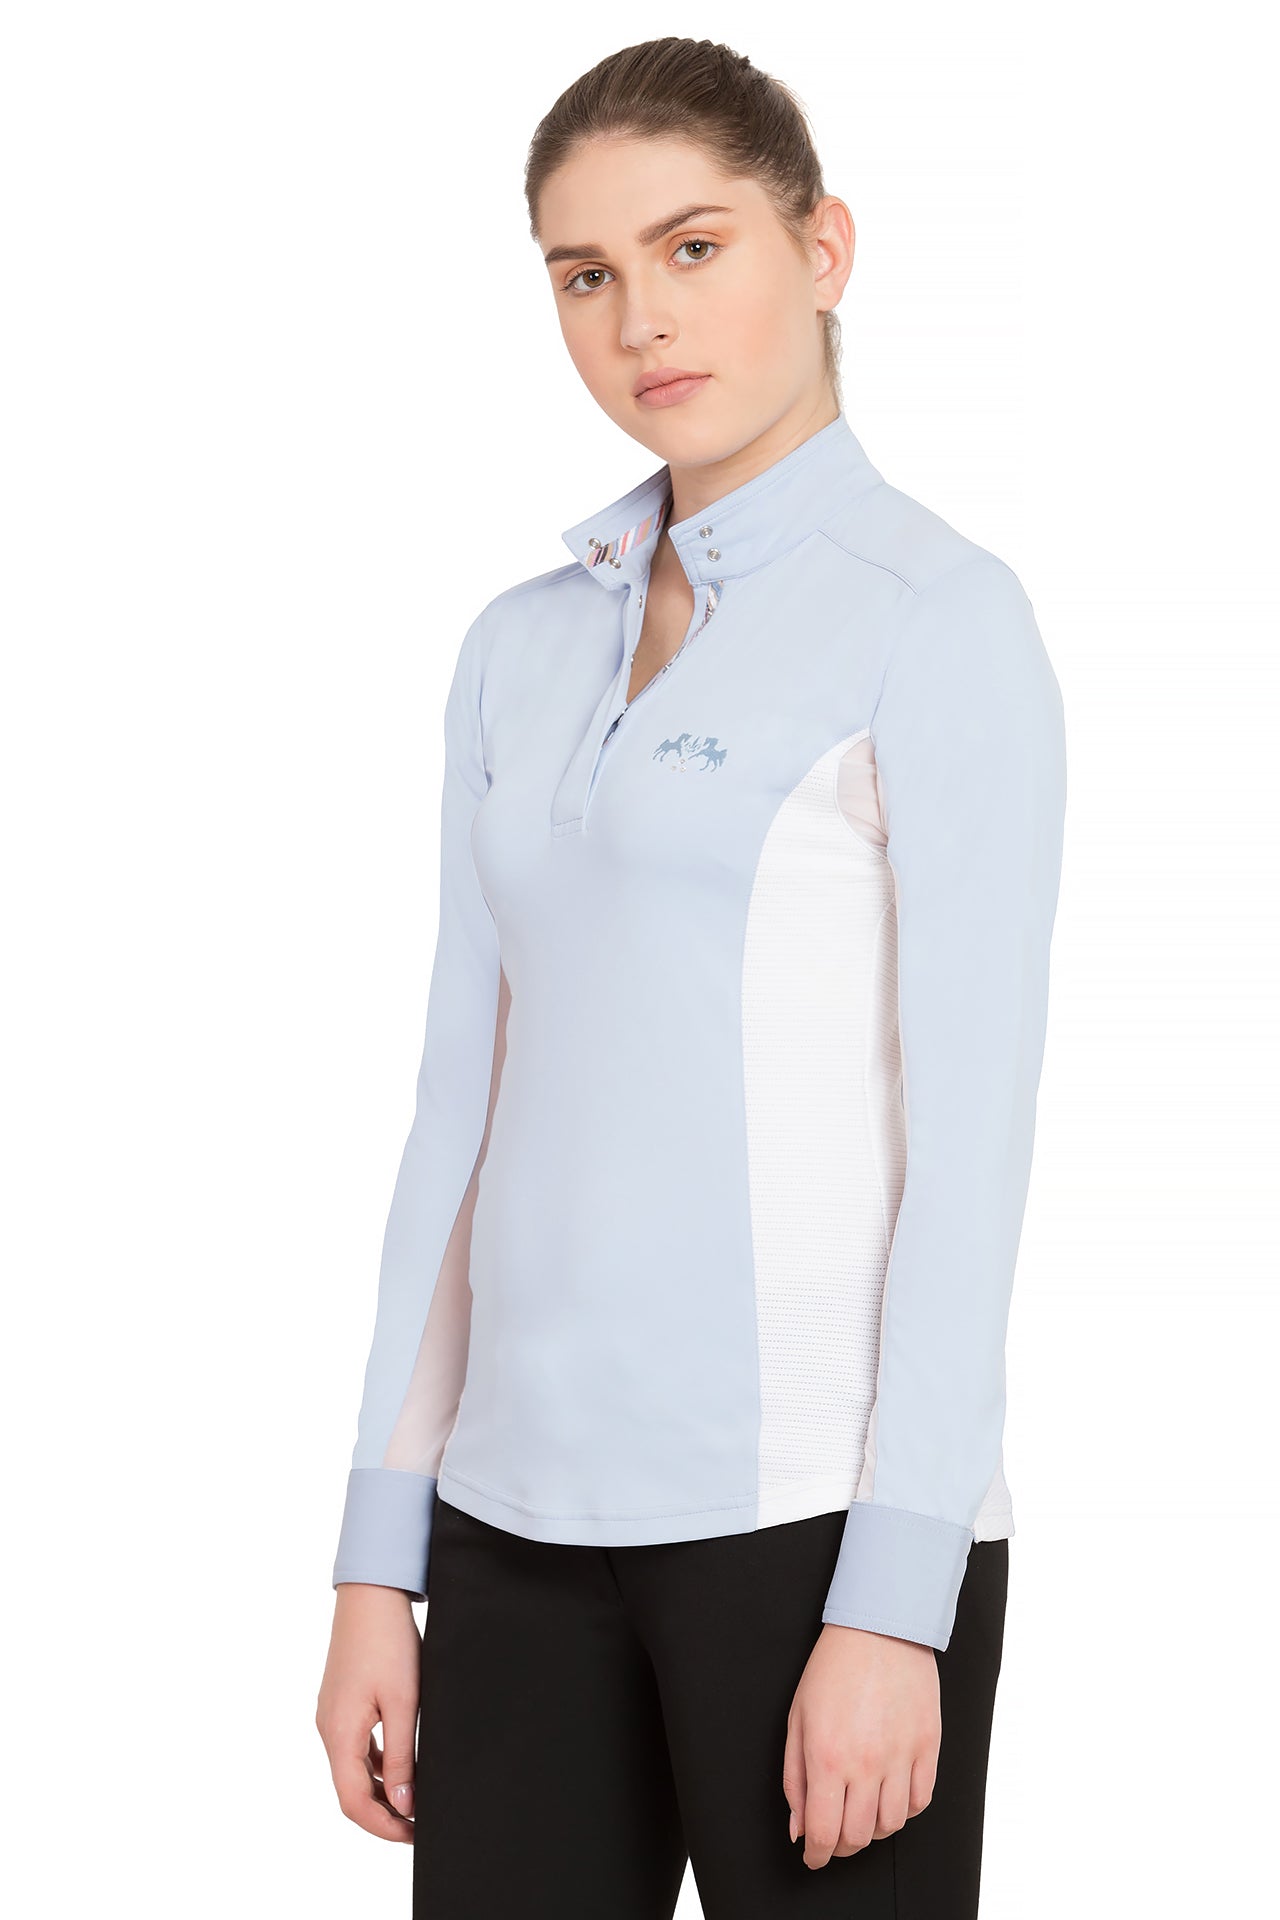 Equine Couture Ladies Cara Long Sleeve Show Shirt - Breeches.com